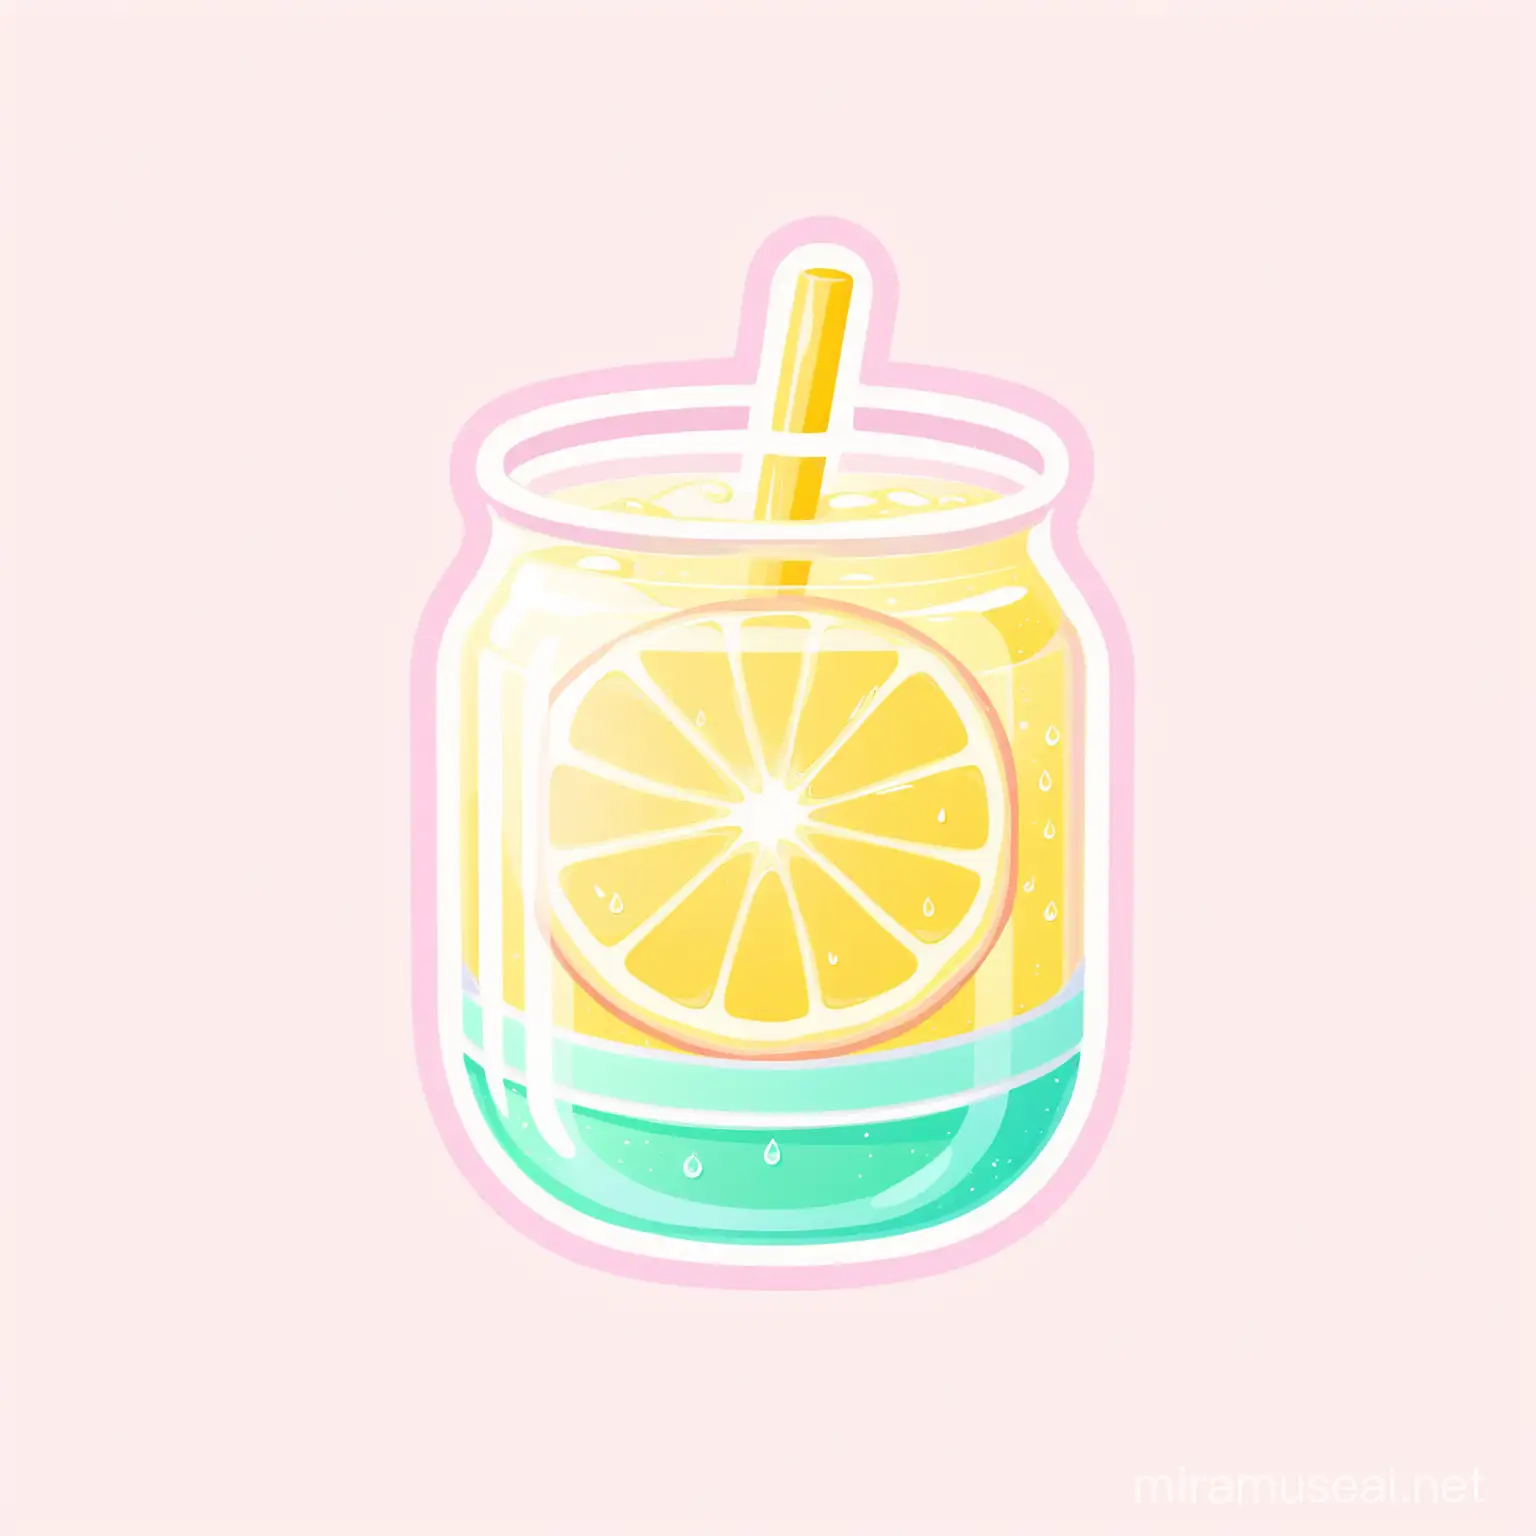 Minimalistic Line Art Logo for Wellness App in Pastel Lemonade Colors